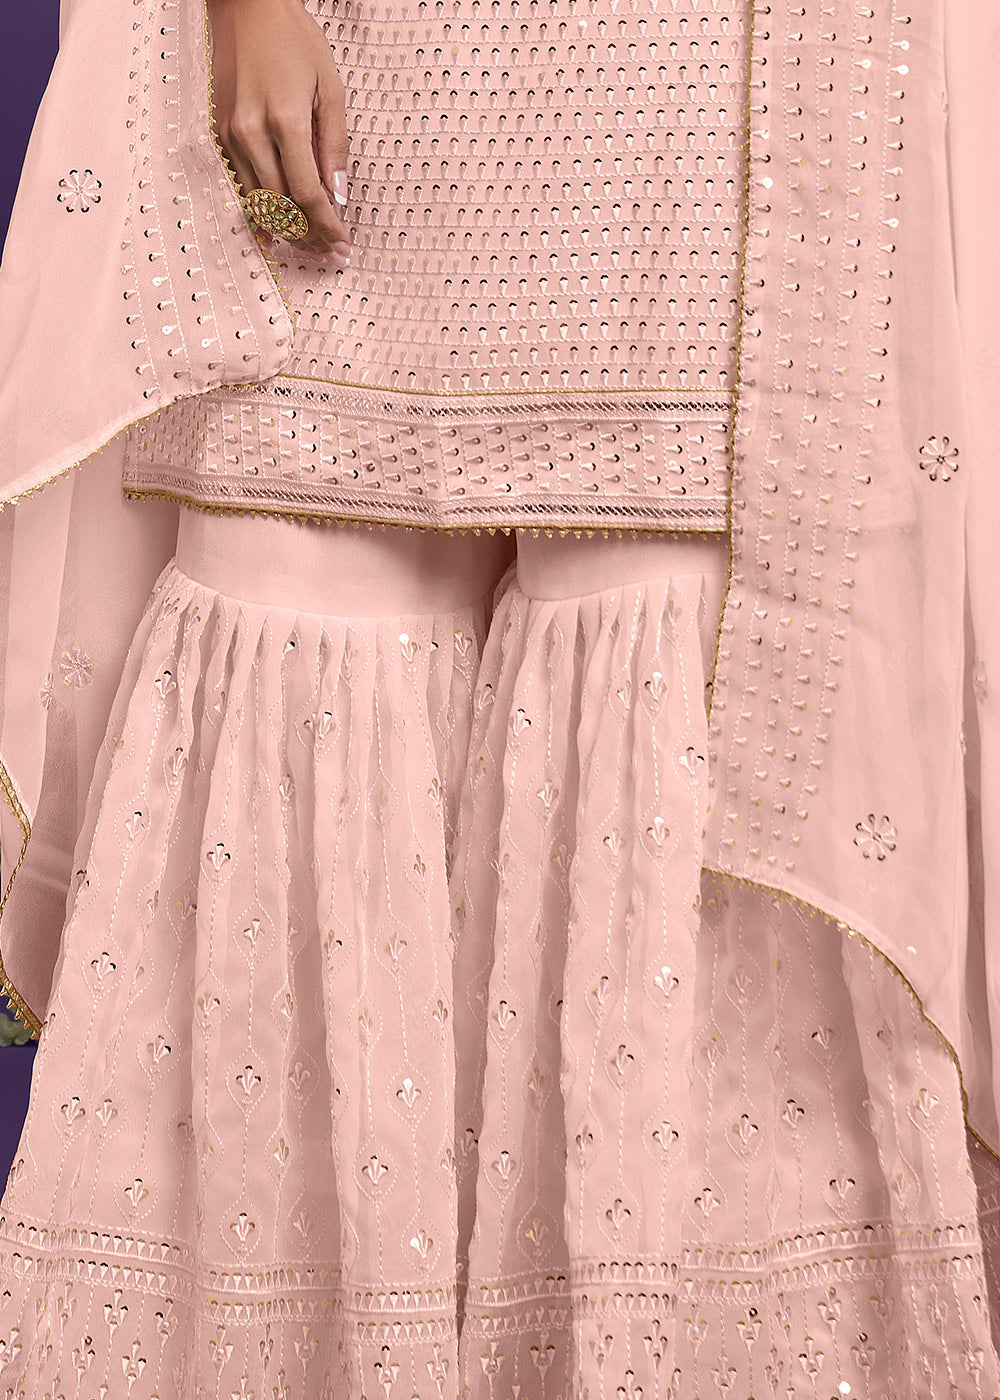 Crepe Pink Georgette Sharara Suit with Thread, Sequins & Khatli work